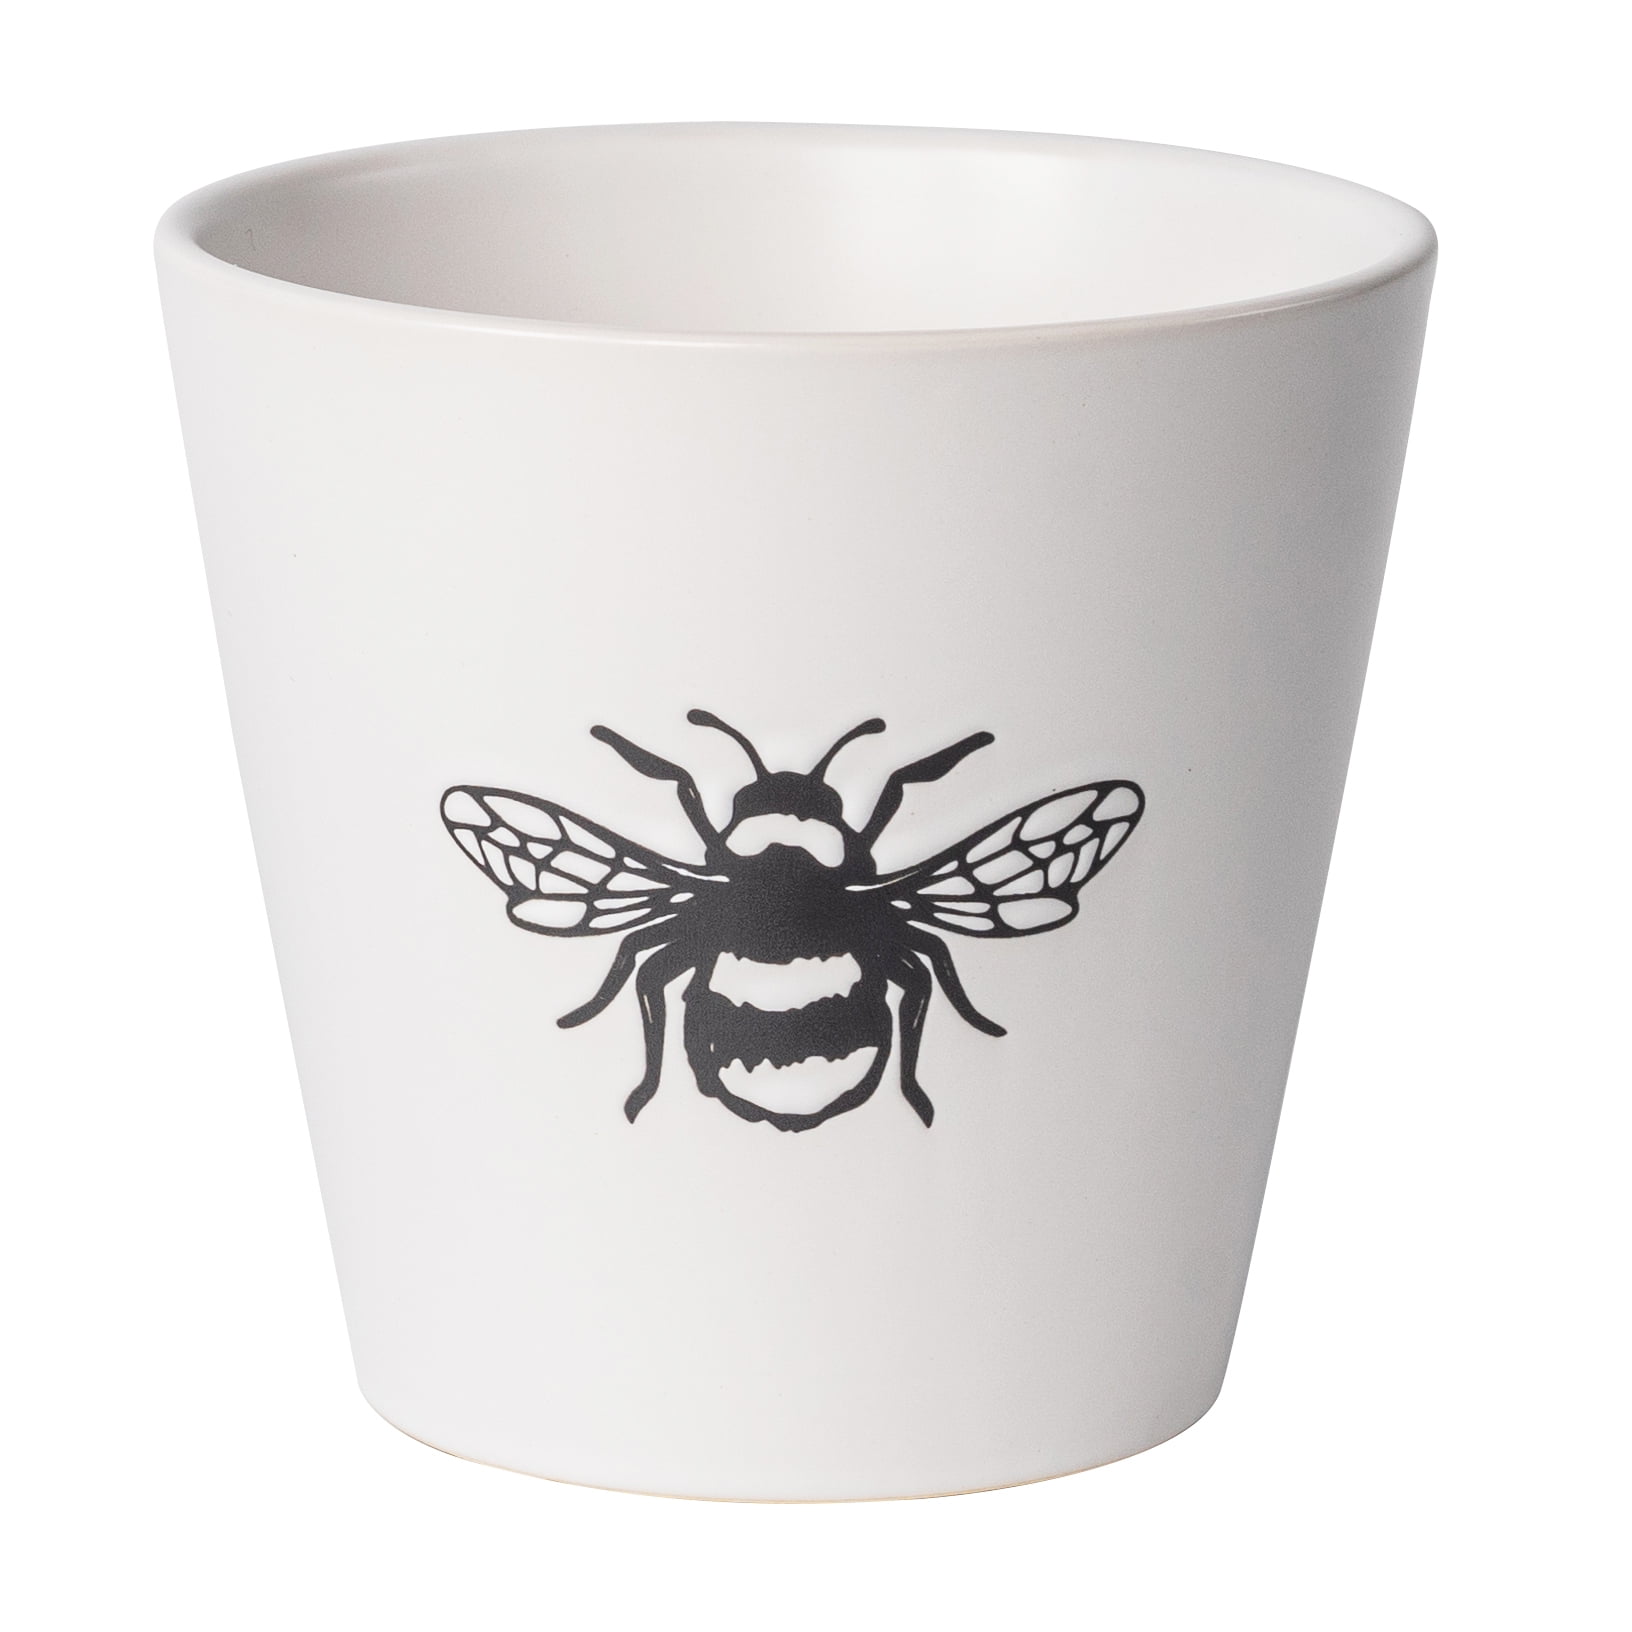 Mainstays 5.9D x 5.51H Round Ceramic Bumblebee Planter, White